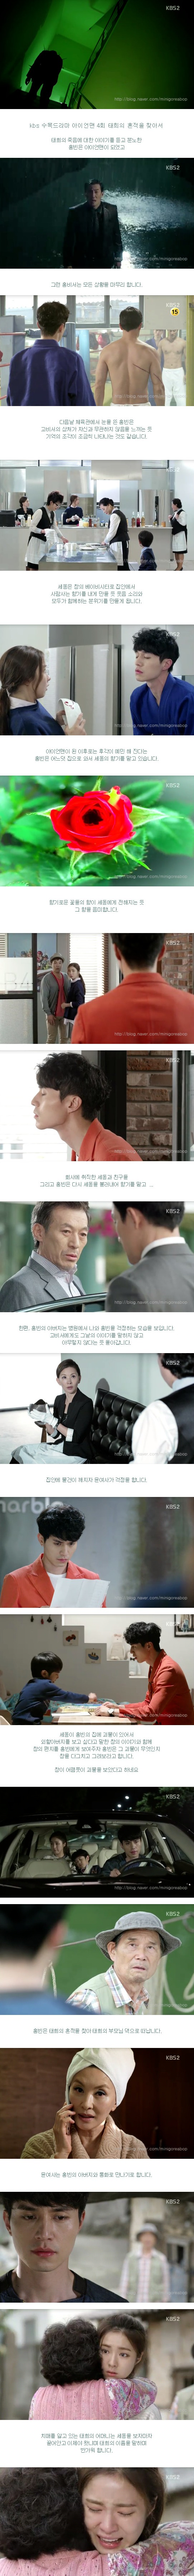 episode 4 captures for the Korean drama 'Blade Man'